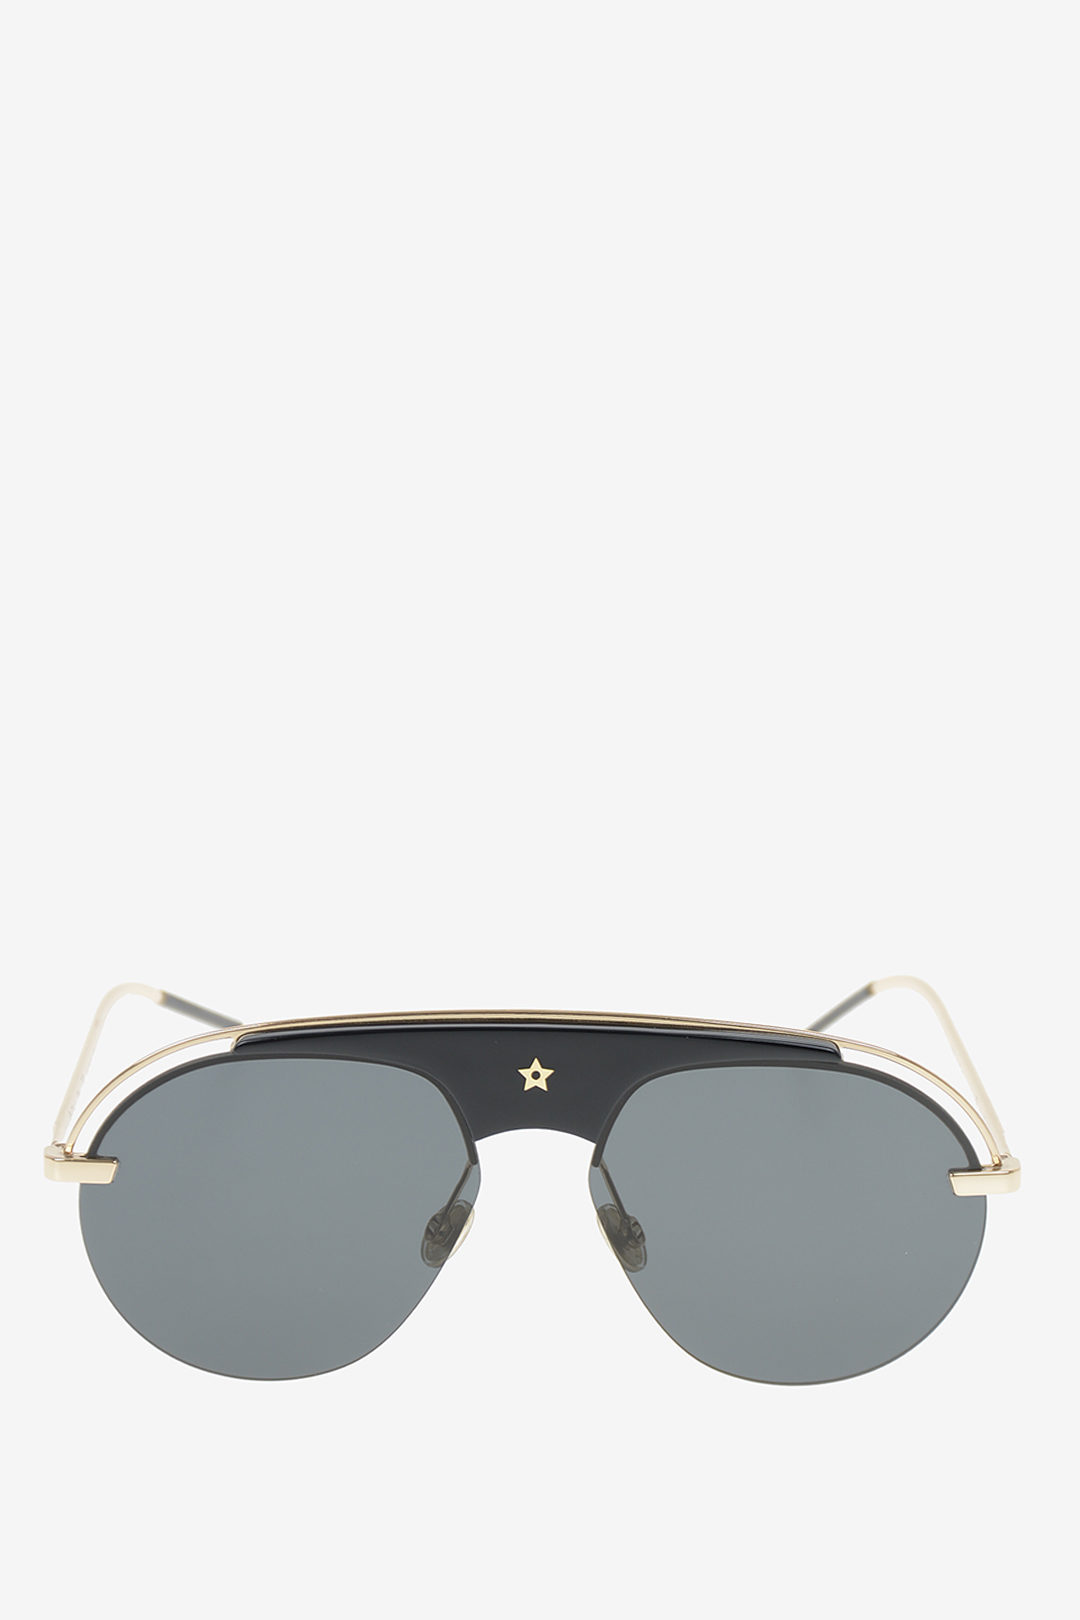 Dior Aviator DIO(R)EVOLUTION sunglasses women - Glamood Outlet